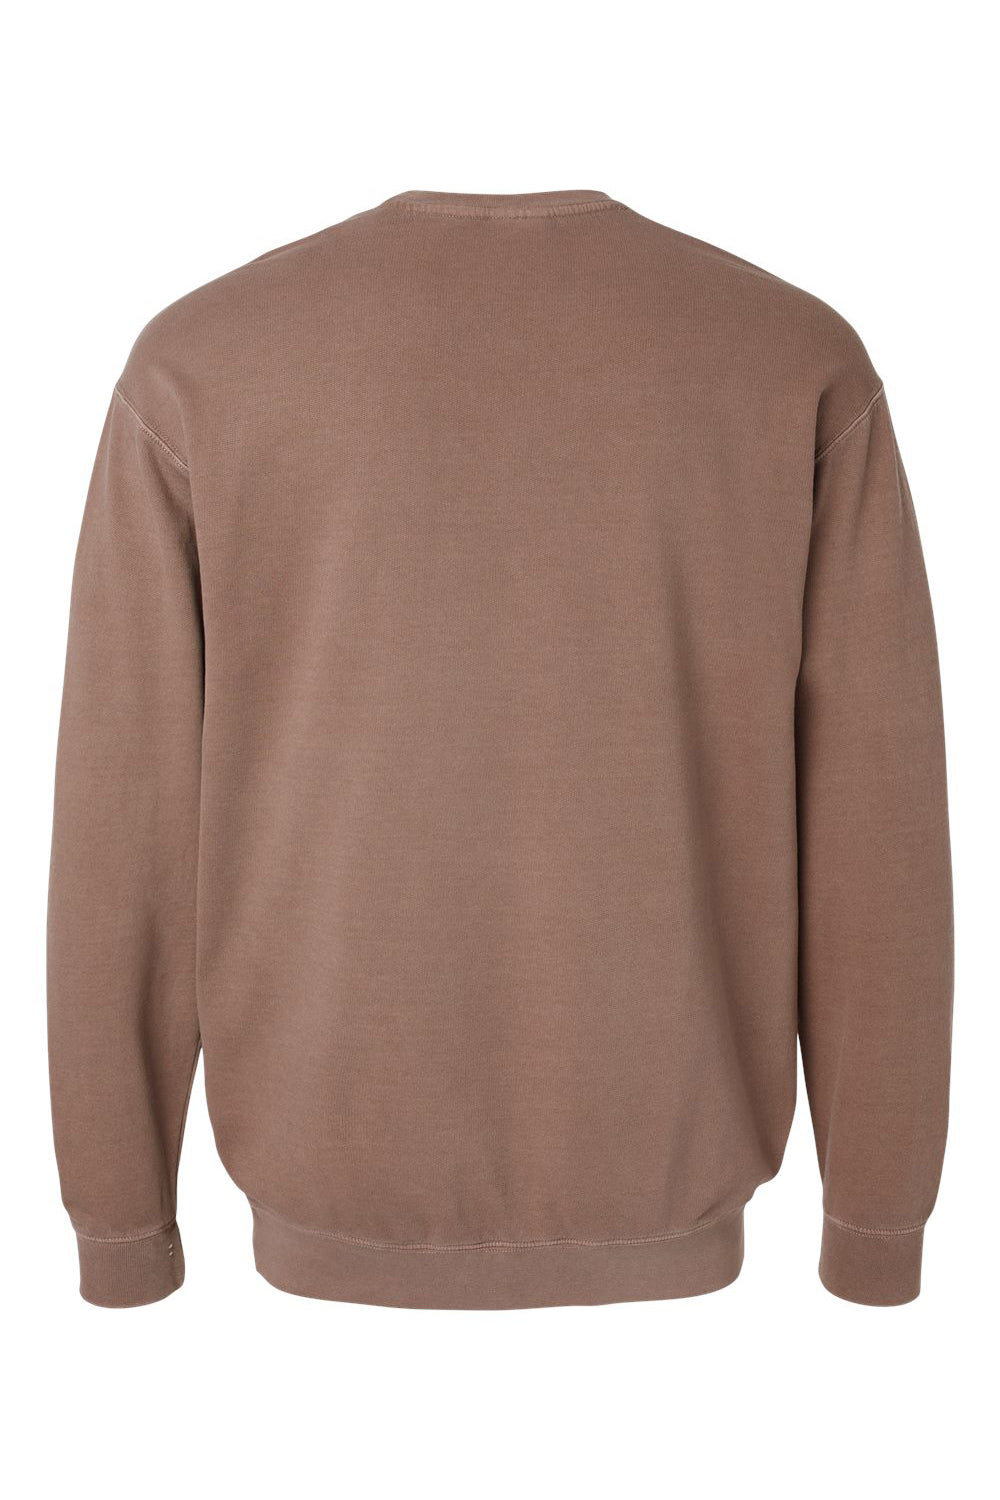 Comfort Colors 1466 Mens Garment Dyed Fleece Crewneck Sweatshirt Espresso Brown Flat Back